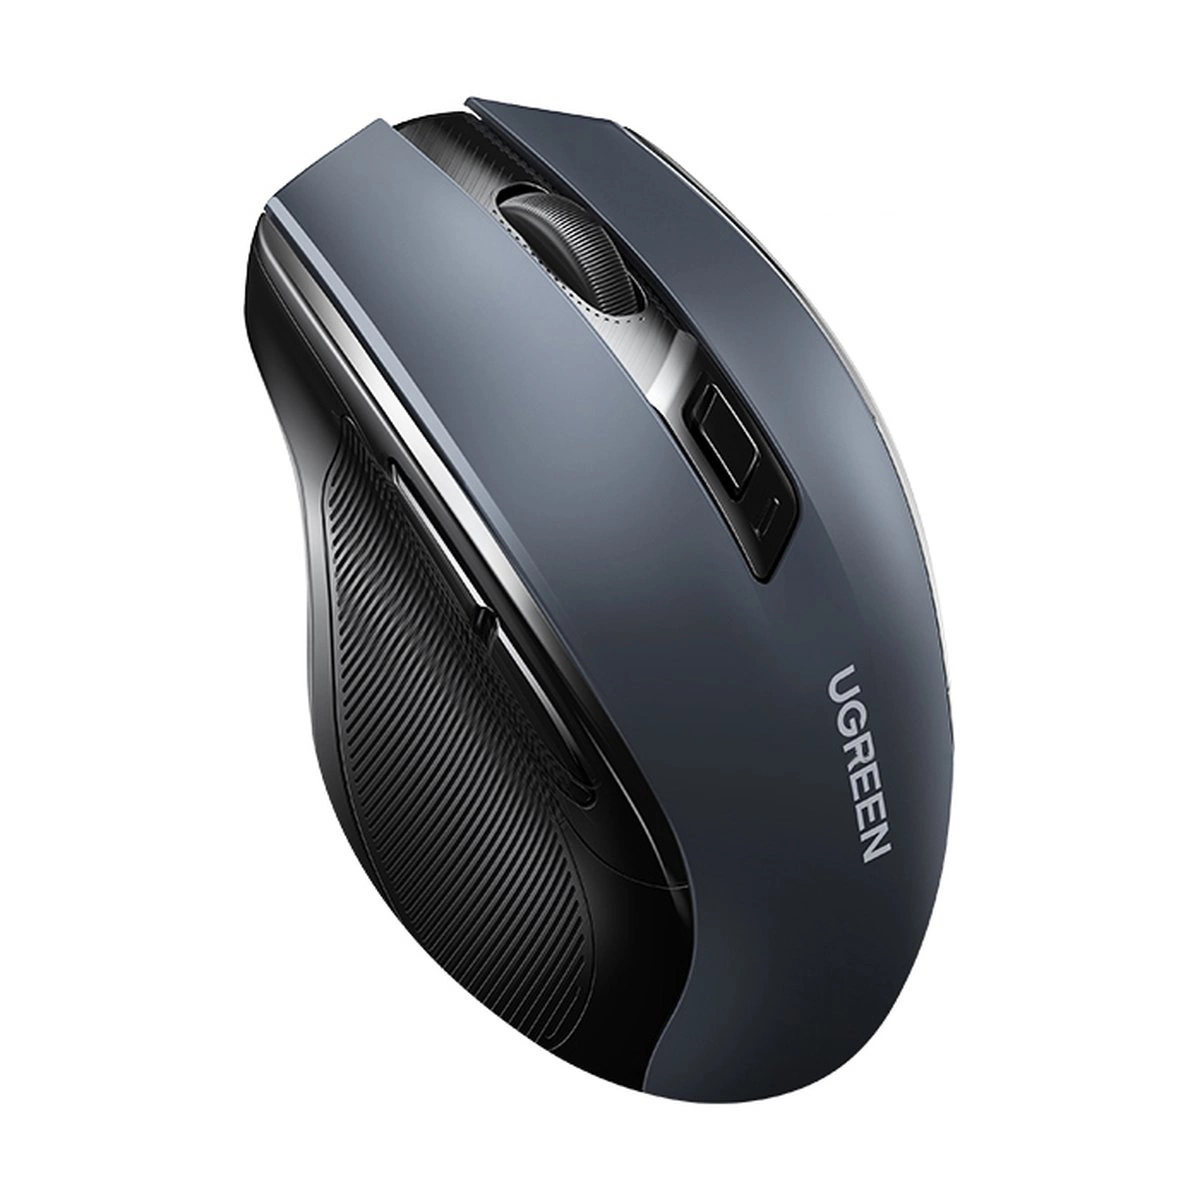 Ugreen MU006 wireless optical mouse on white background